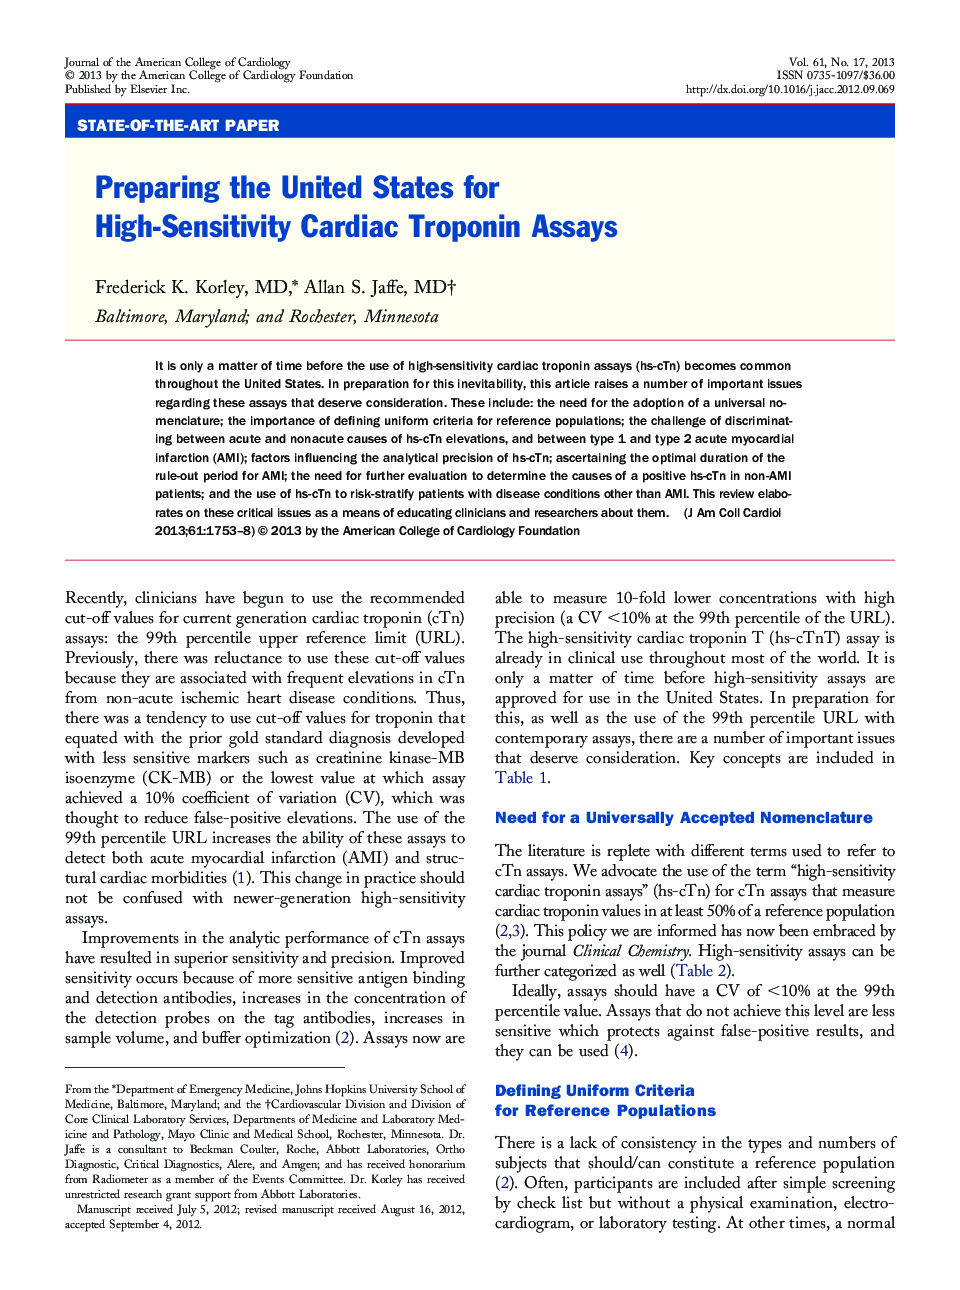 Preparing the United States for High-Sensitivity Cardiac Troponin Assays